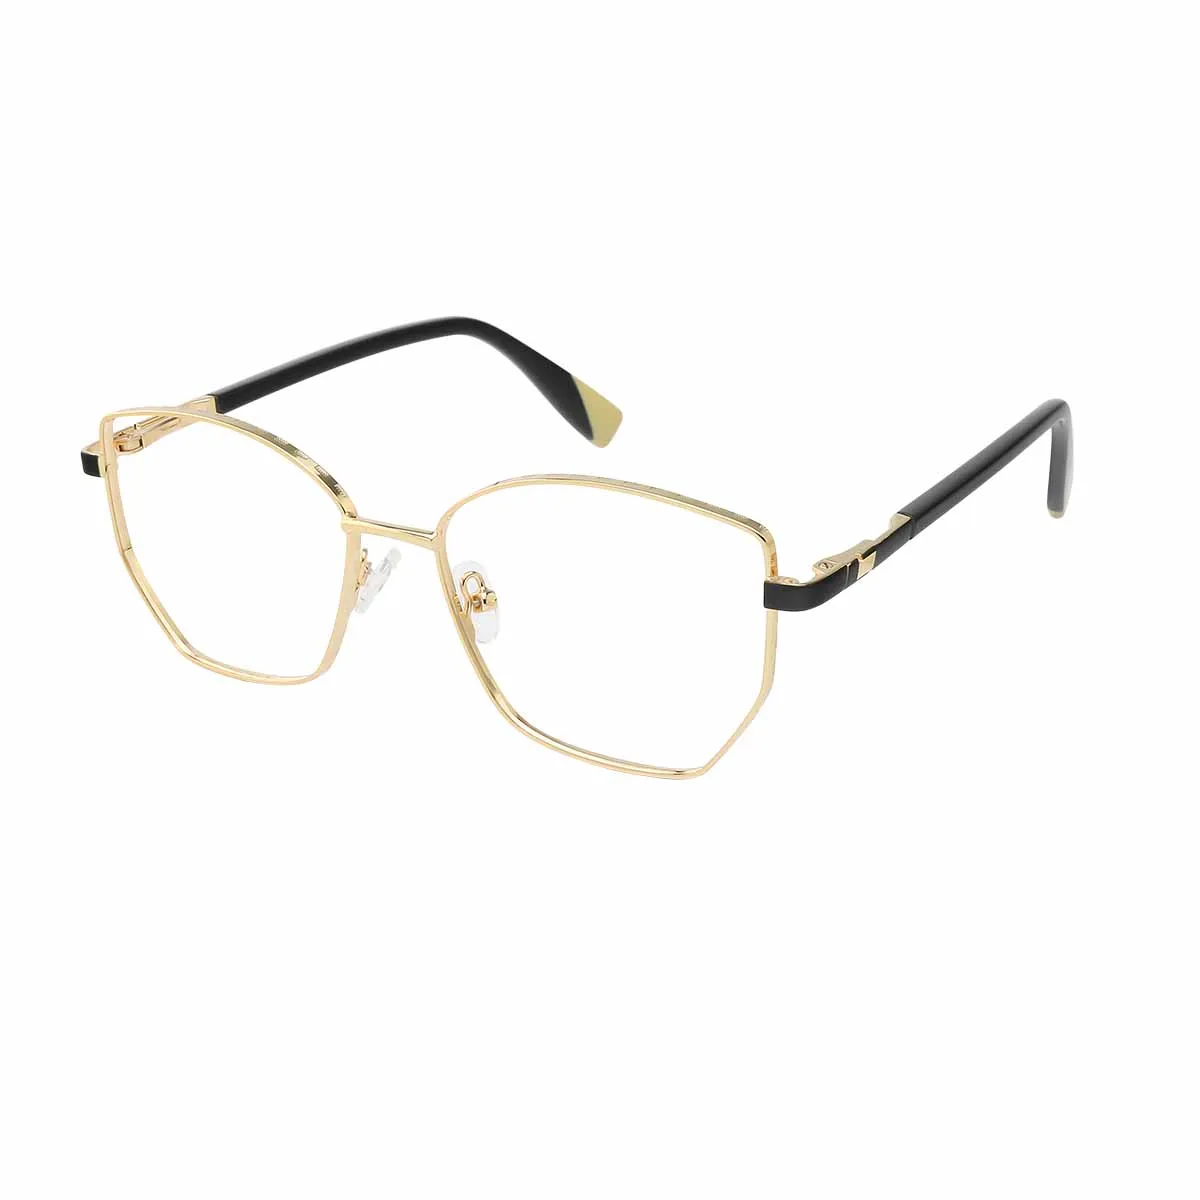 Fashion Square Gold/Black Reading Glasses for Women